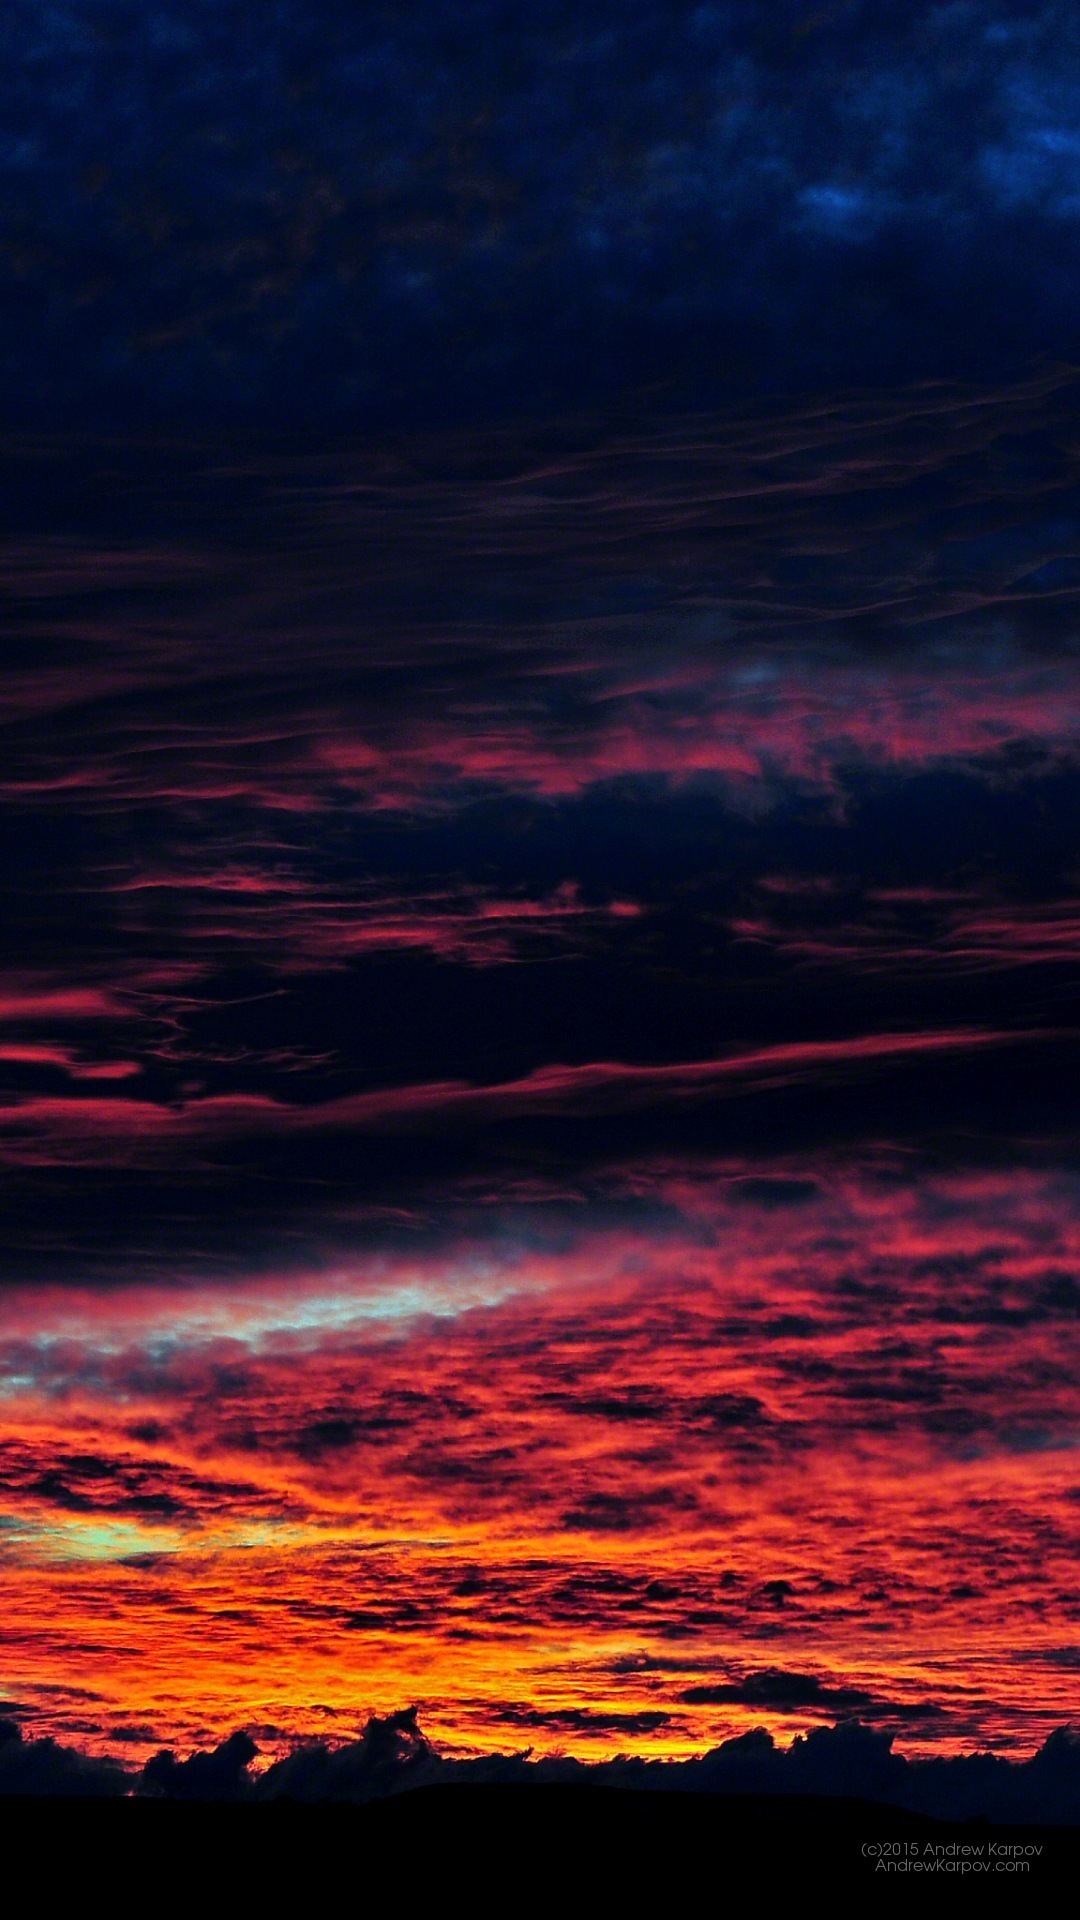 foto untuk wallpaper,himmel,nachglühen,roter himmel am morgen,rot,horizont